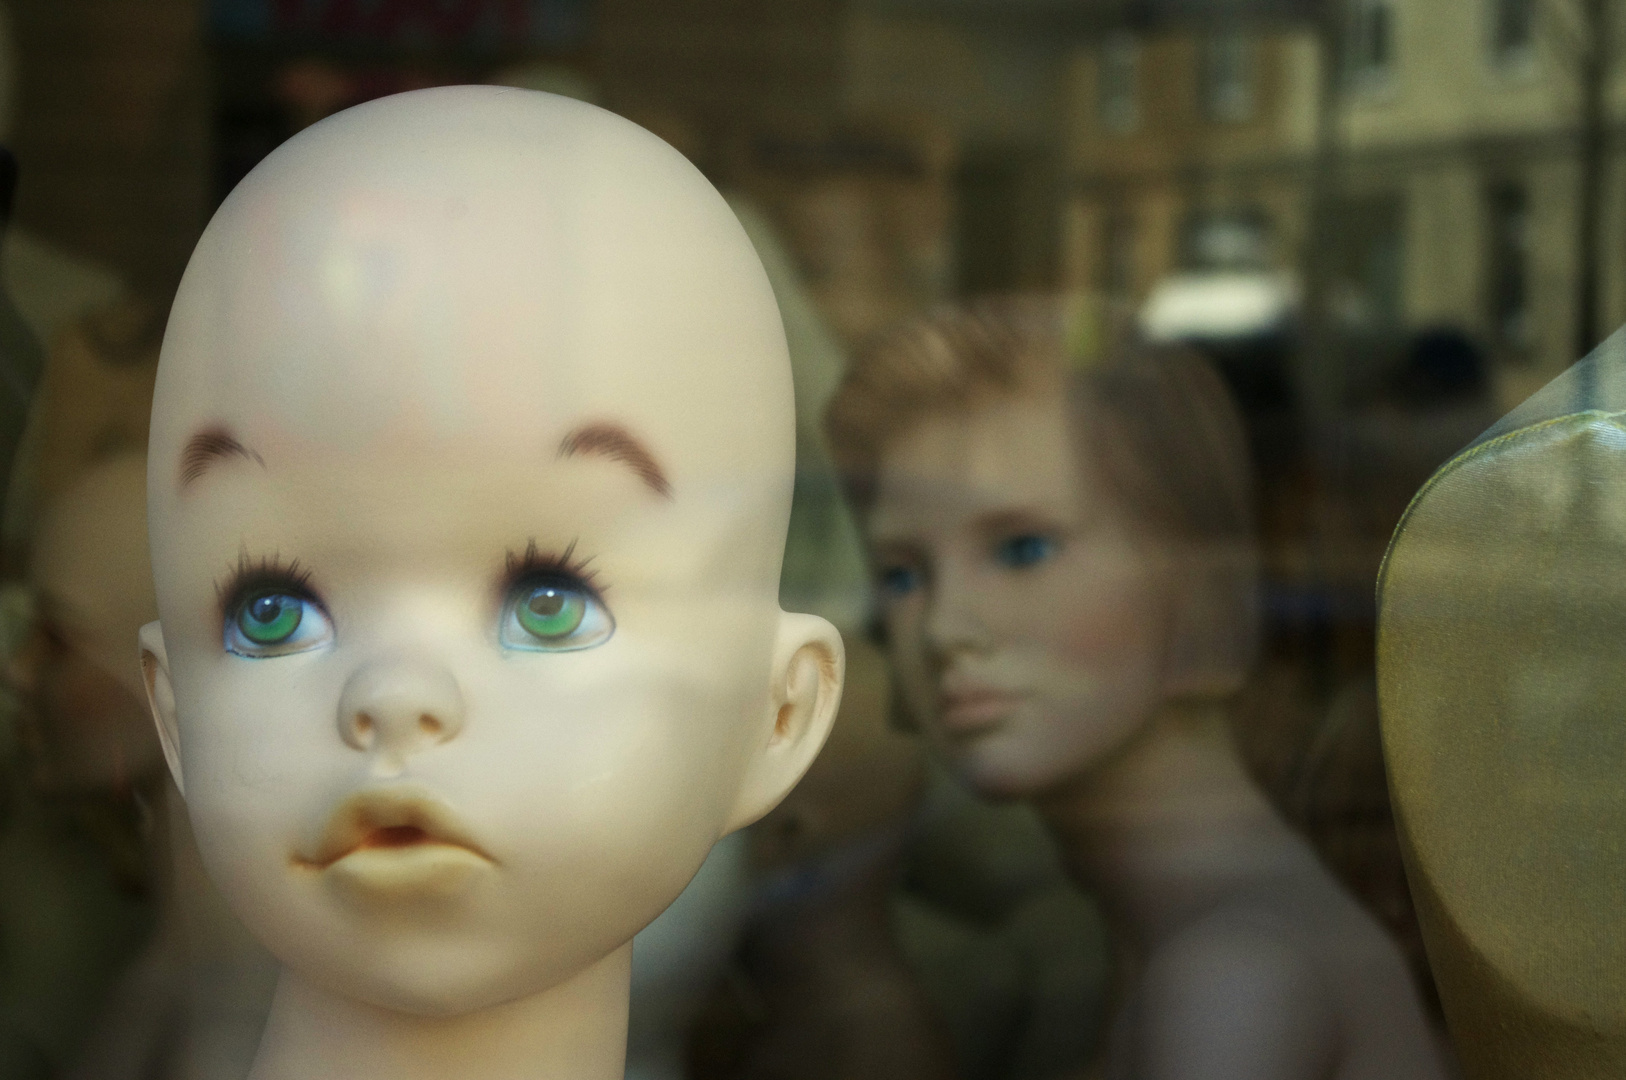 Baby dolls unkown future